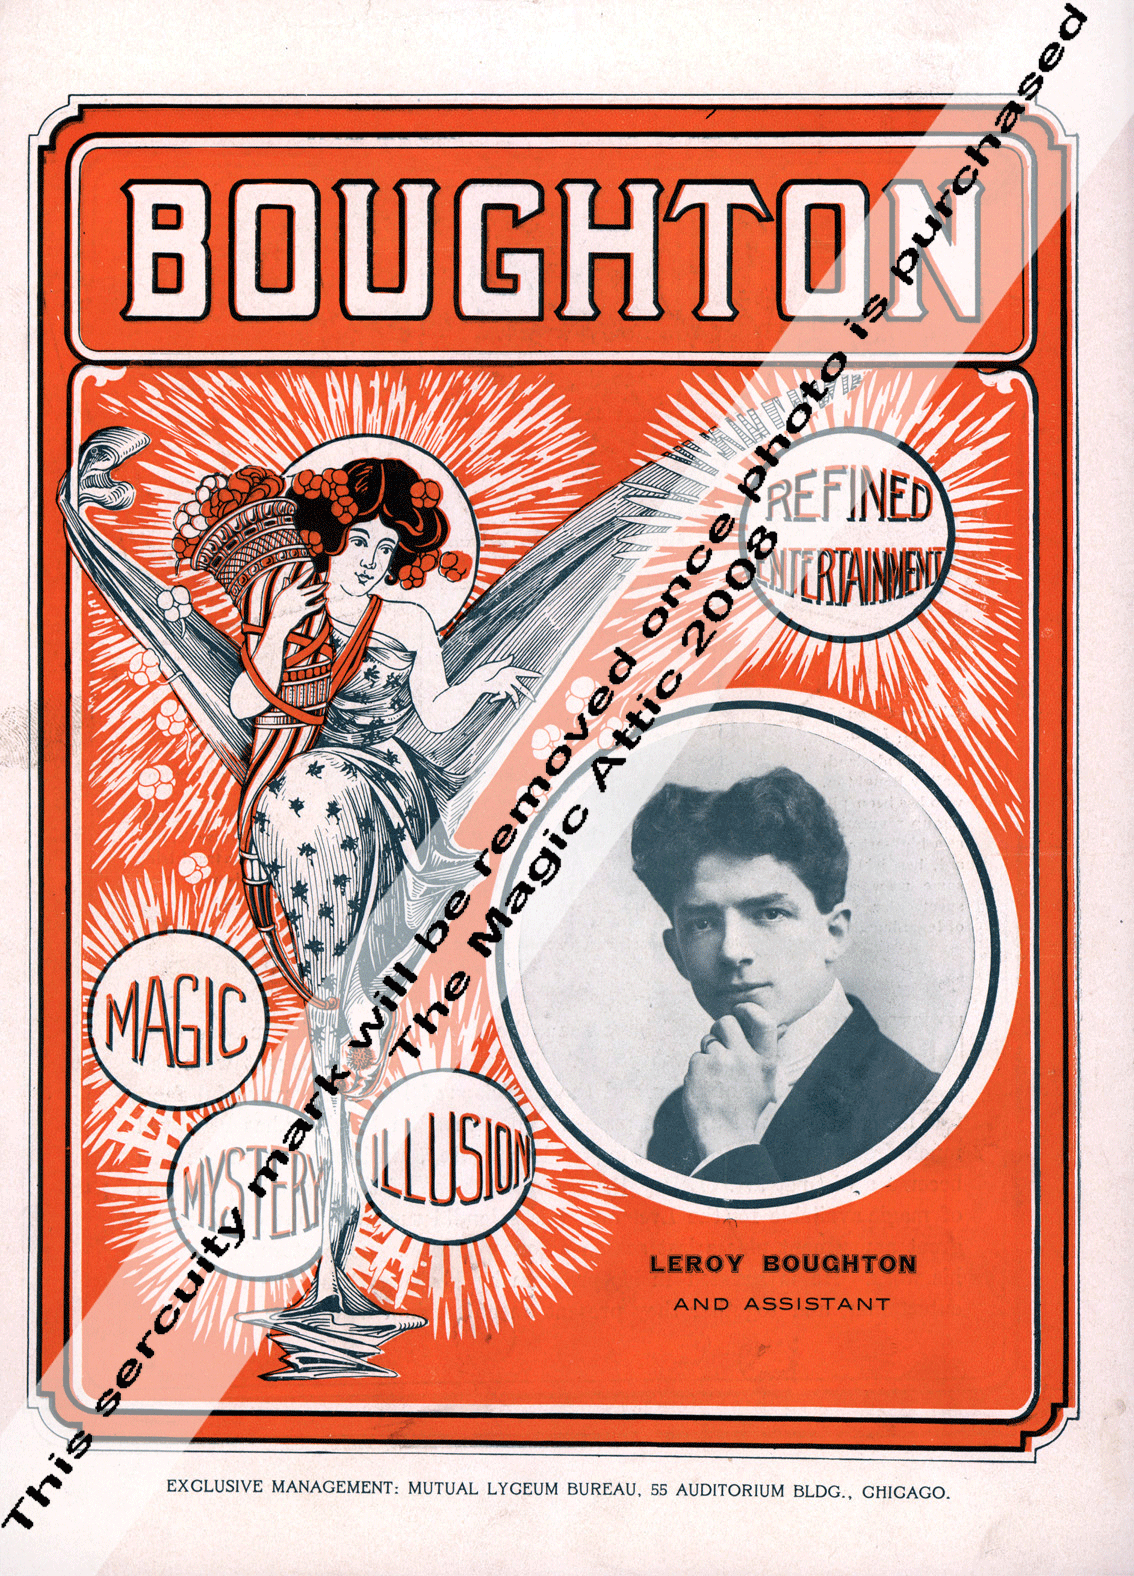 Boughton - Magic - Mystery - Illusion